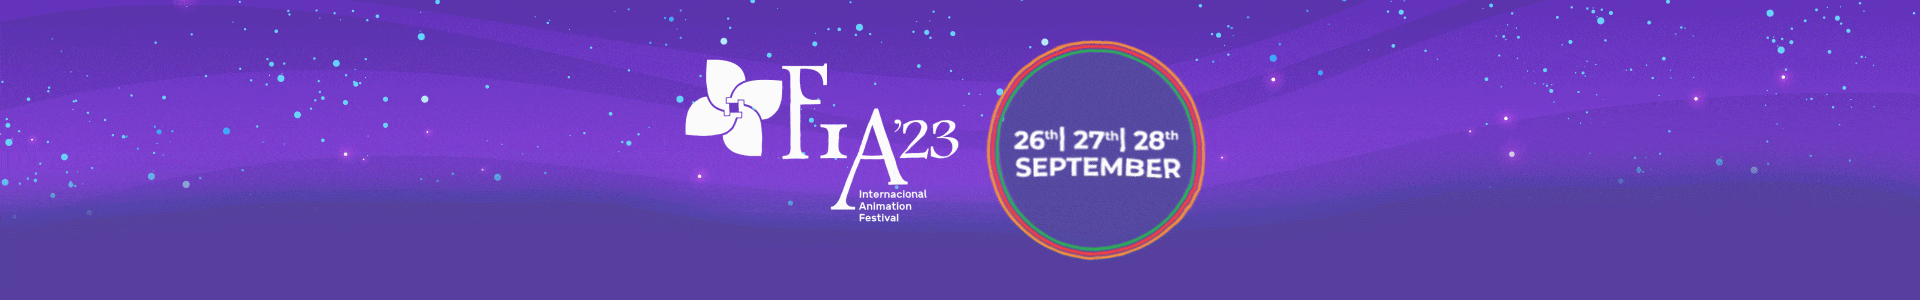 International Animation Festival